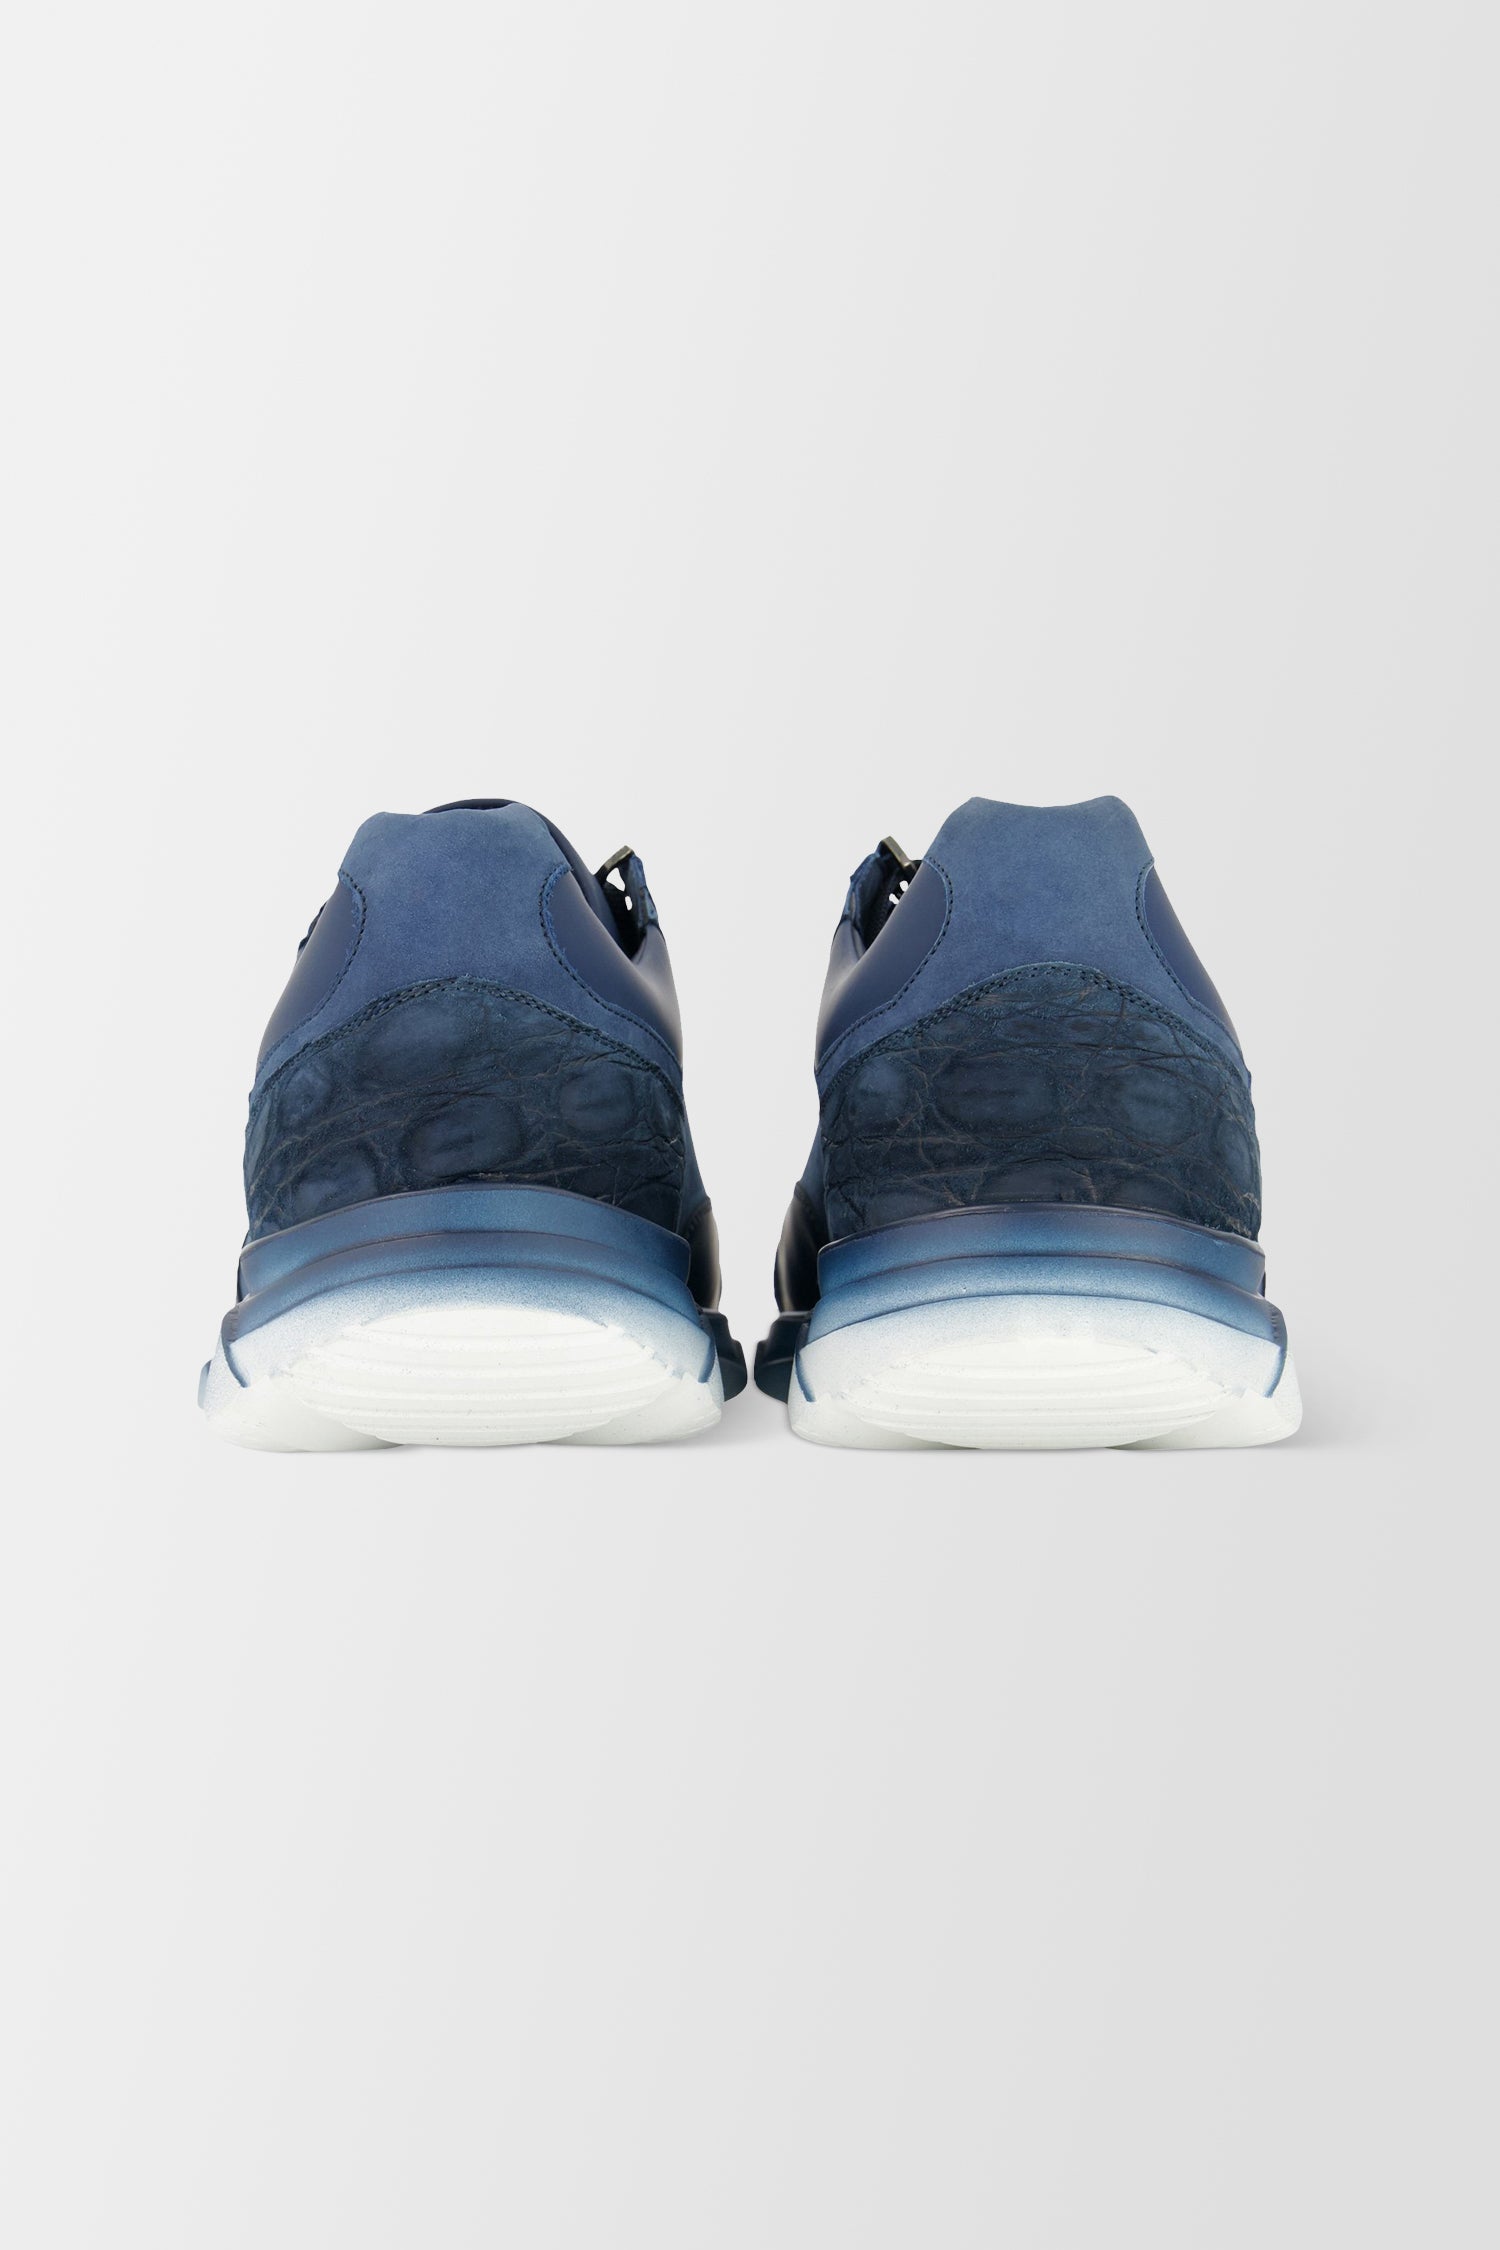 Zilli Blue Sneakers